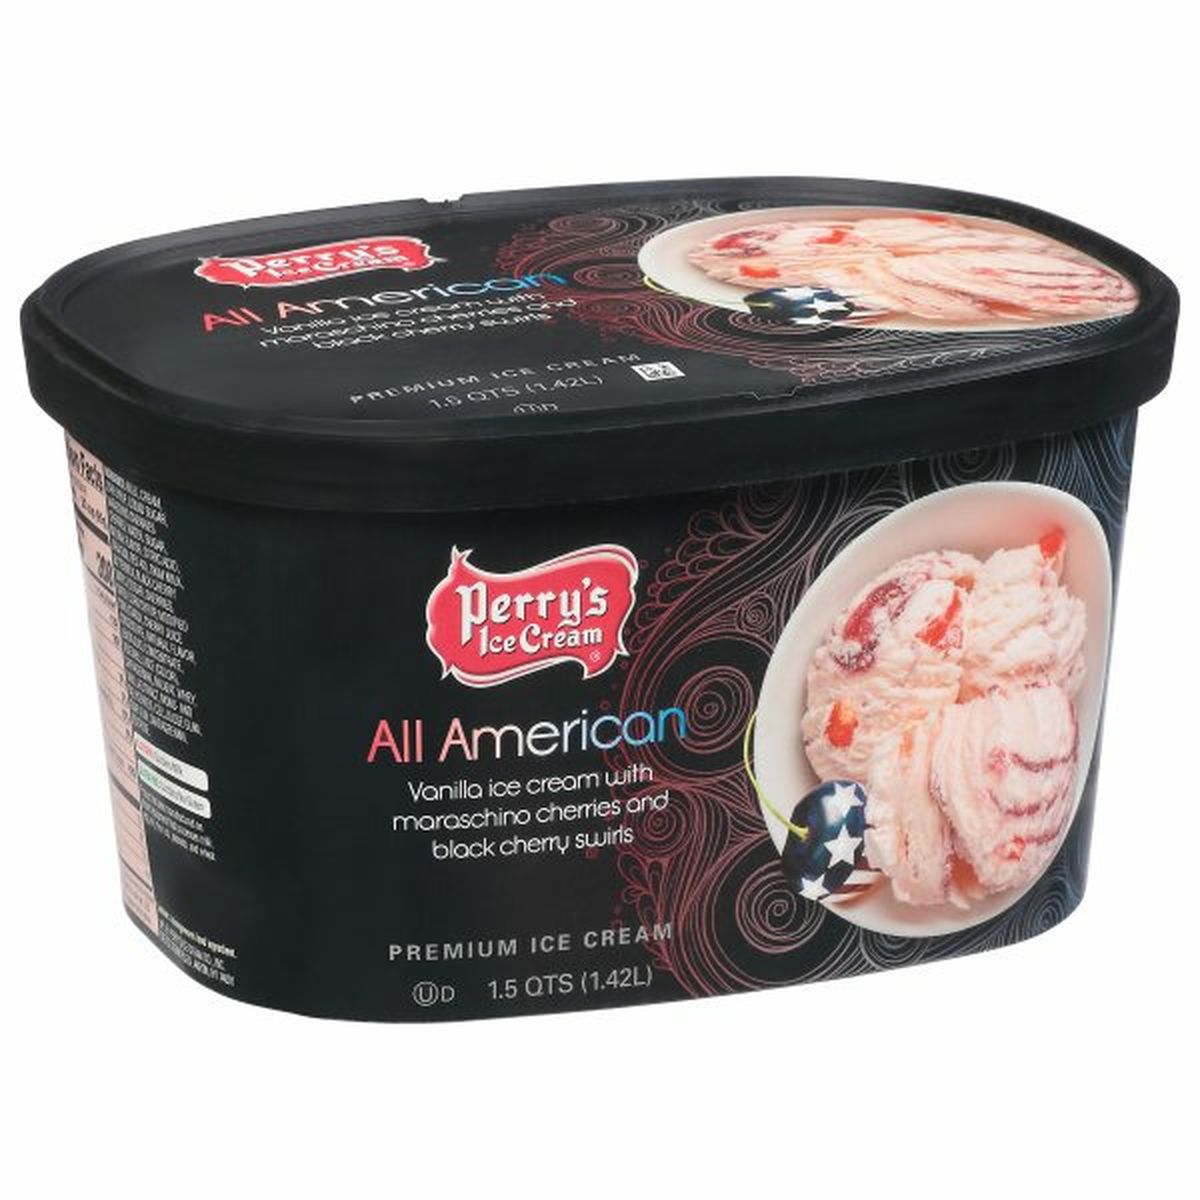 Calories in Perry's Ice Cream Premium, All American